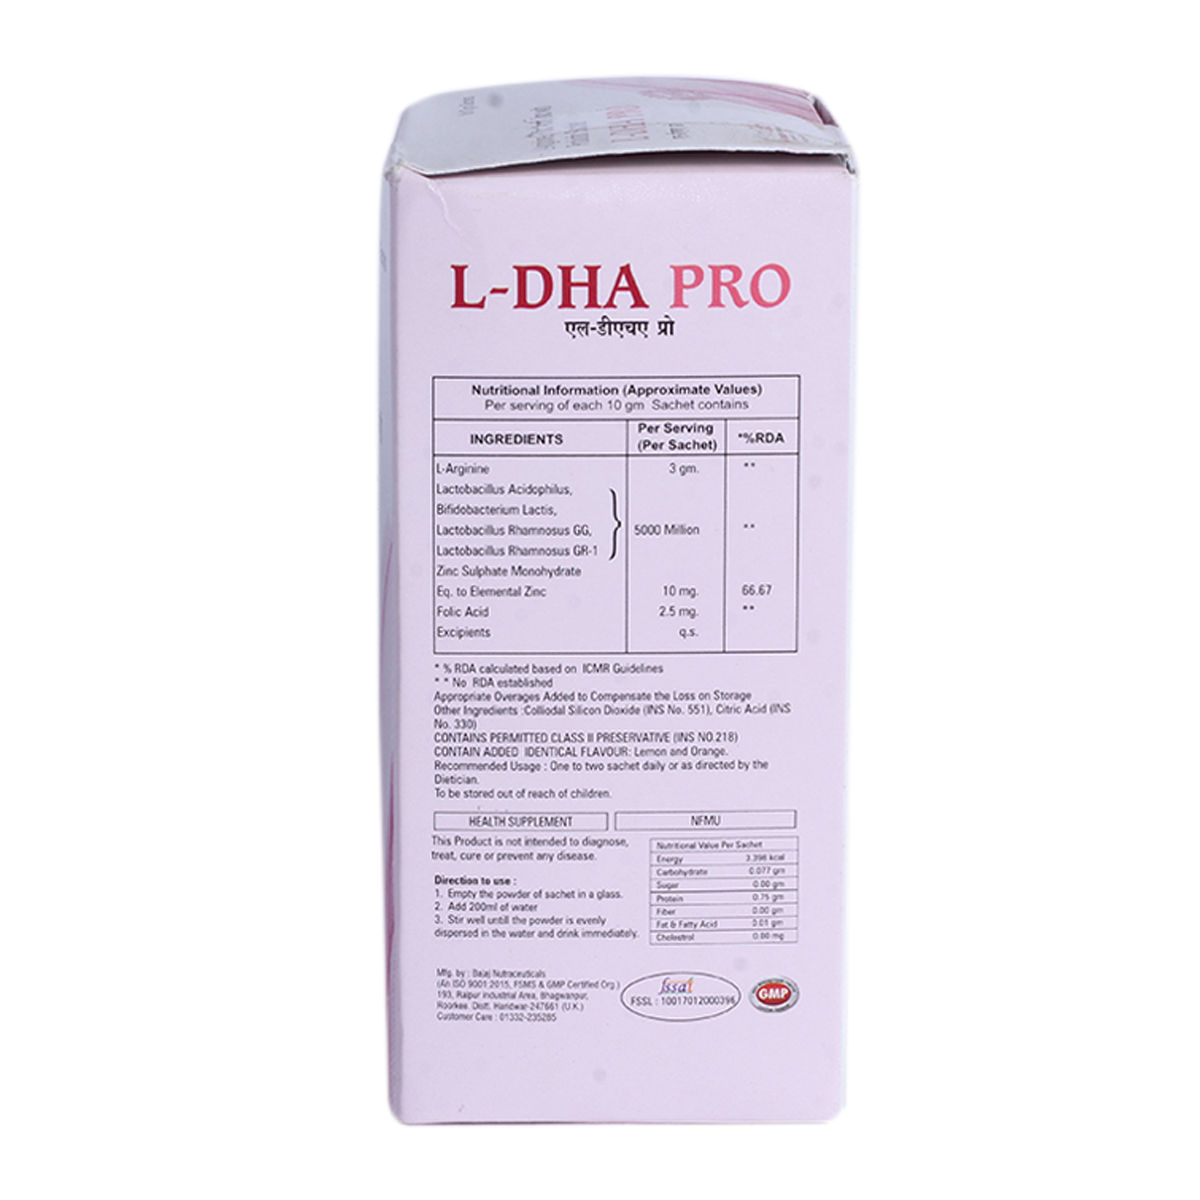 L DHA PRO Granules 10 gm, Pack of 1 